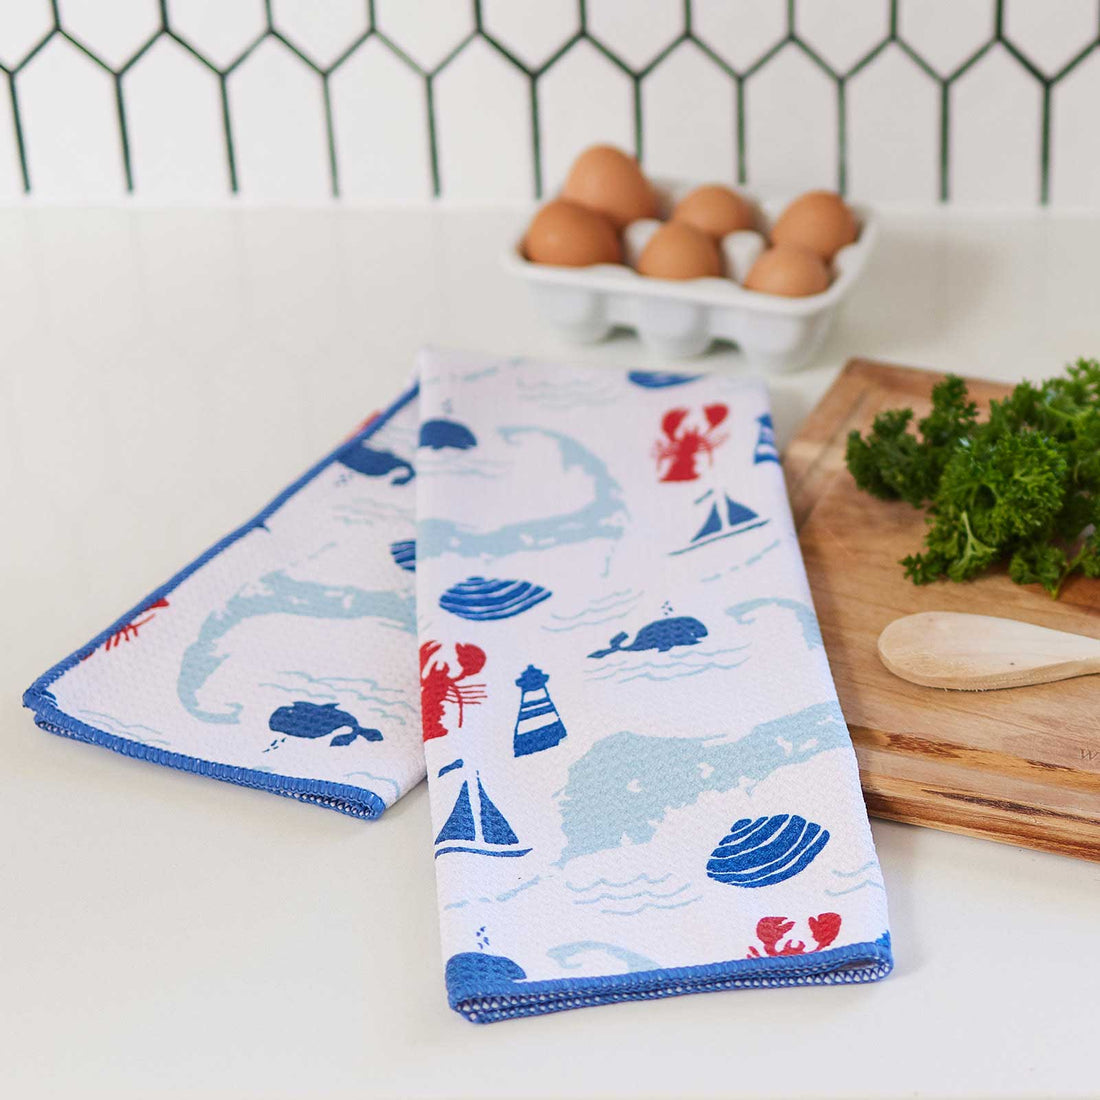 Floral Fields Kitchen Tea Towel – The Cook's Nook